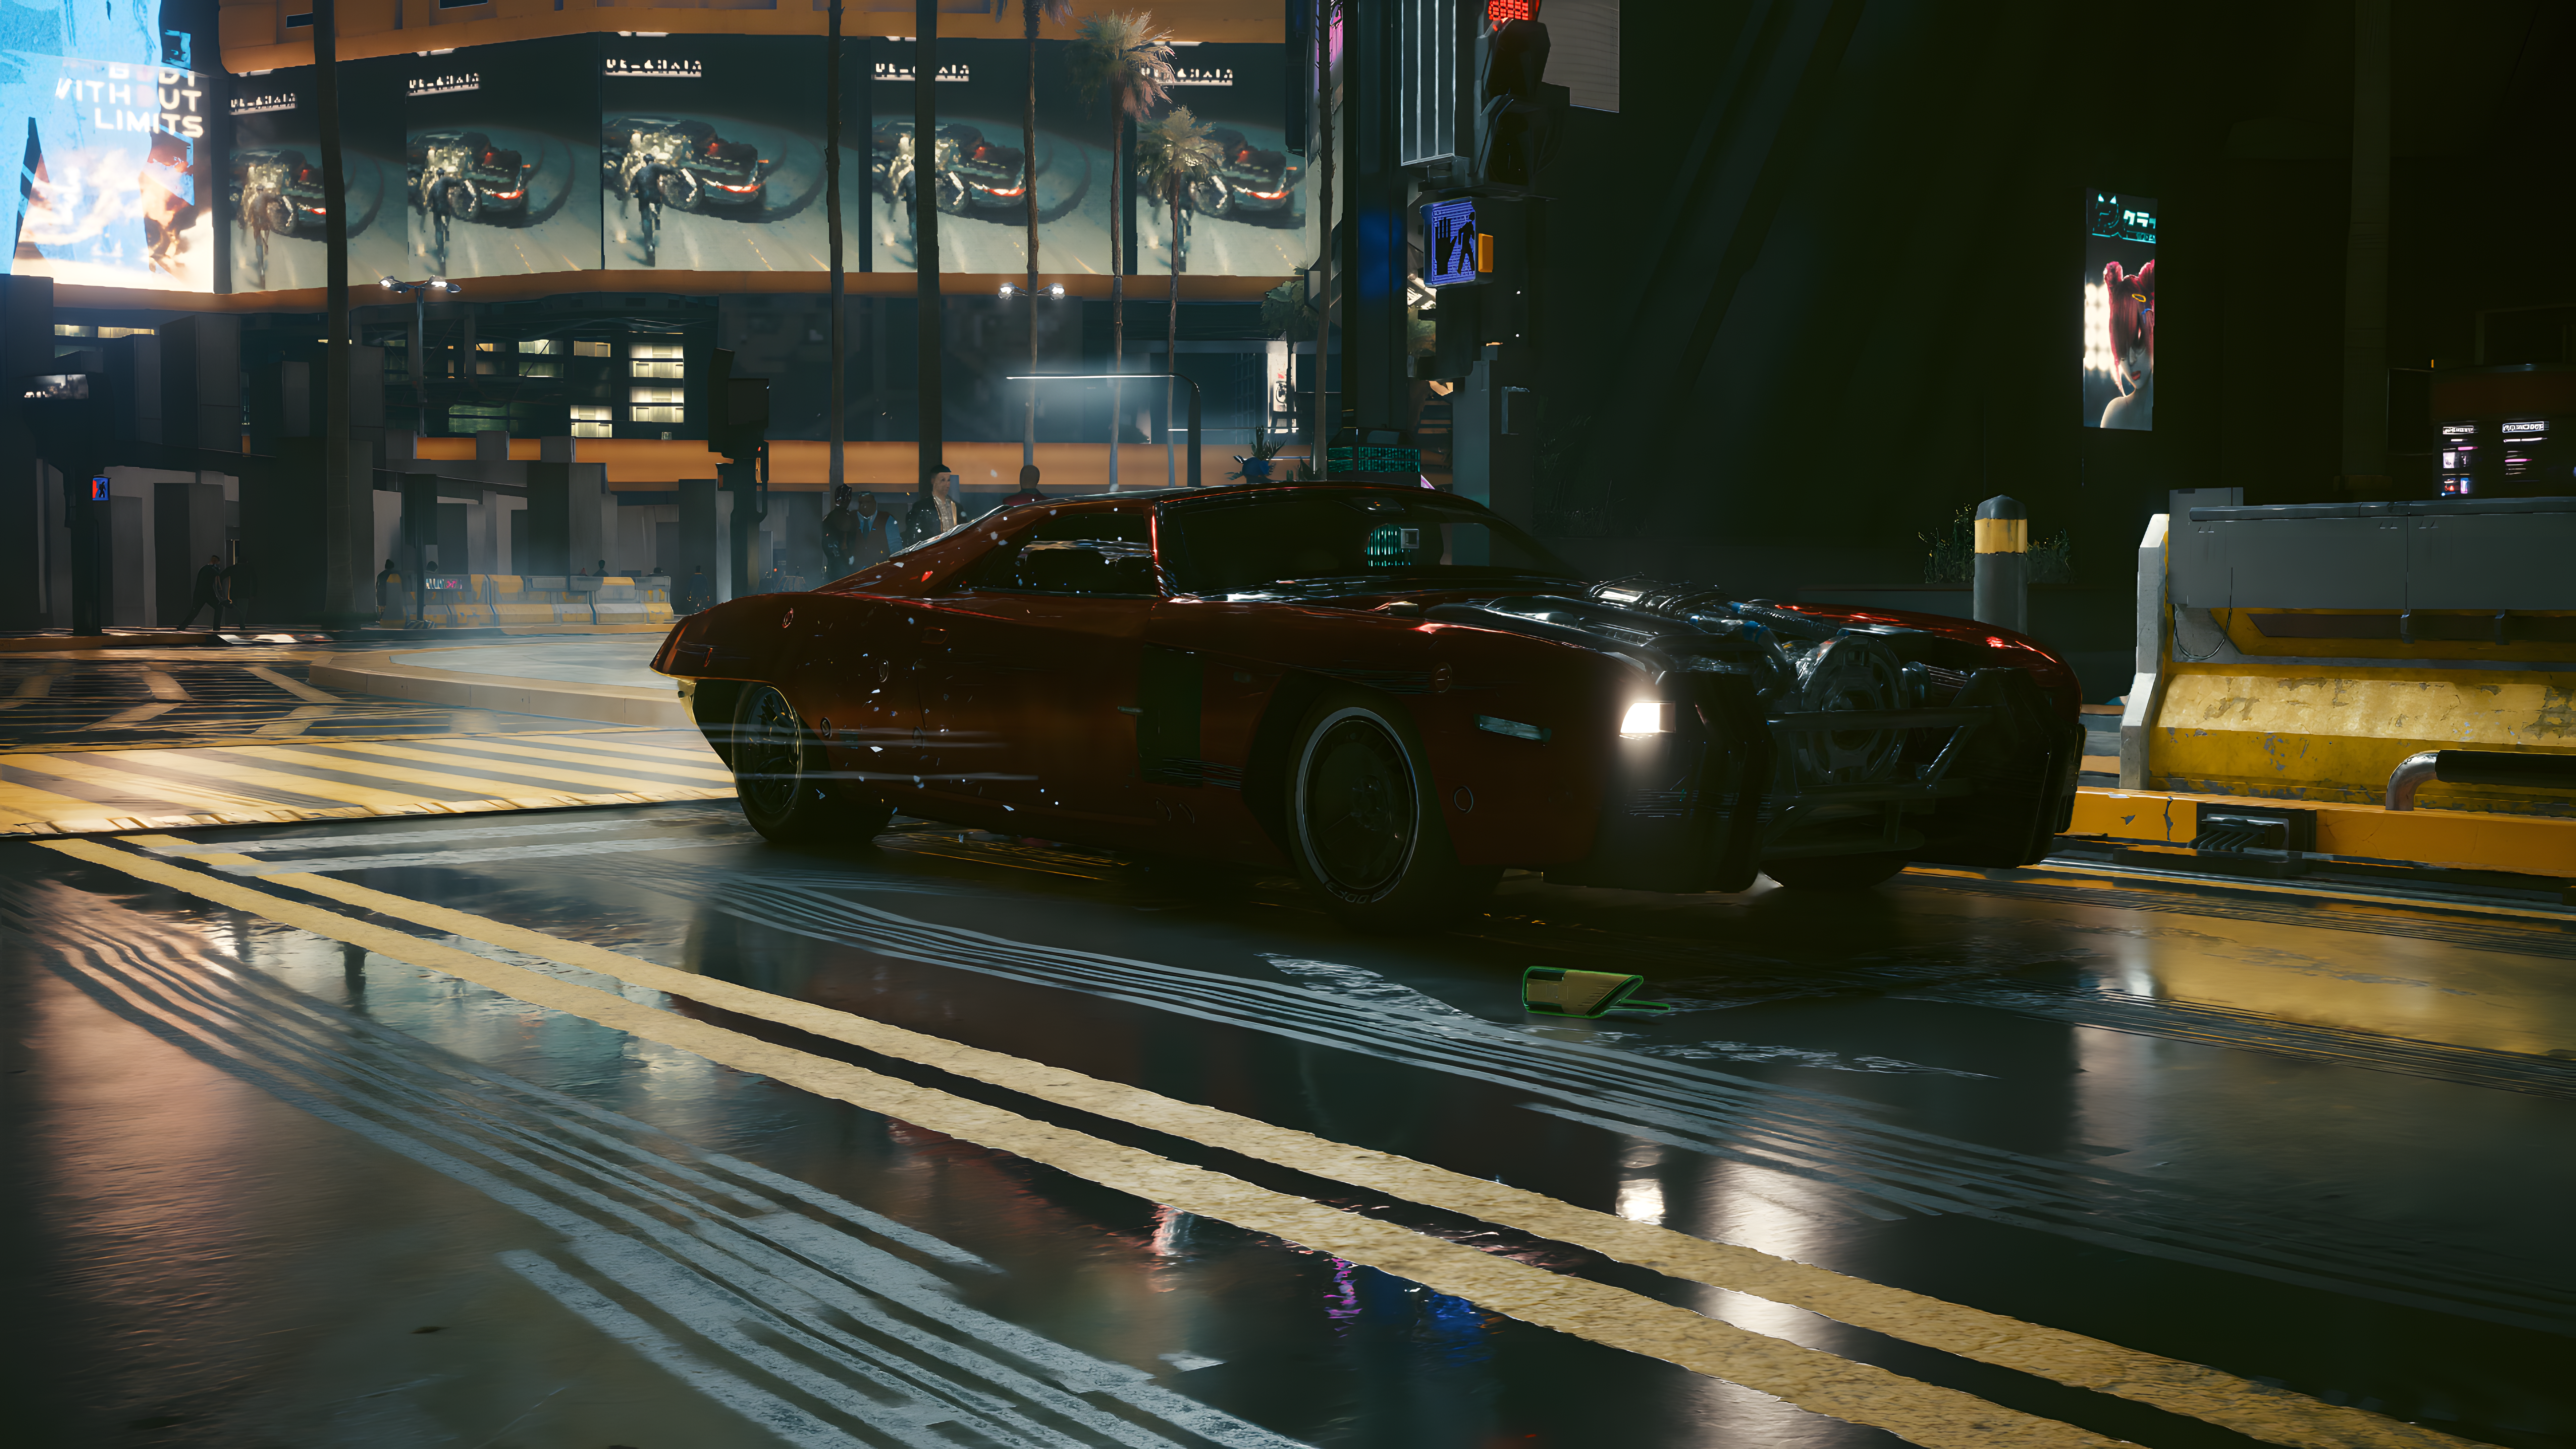 Futuristic cyberpunk car racing through a neon-lit cityscape, inspired by Cyberpunk 2077 - HD desktop wallpaper and background.